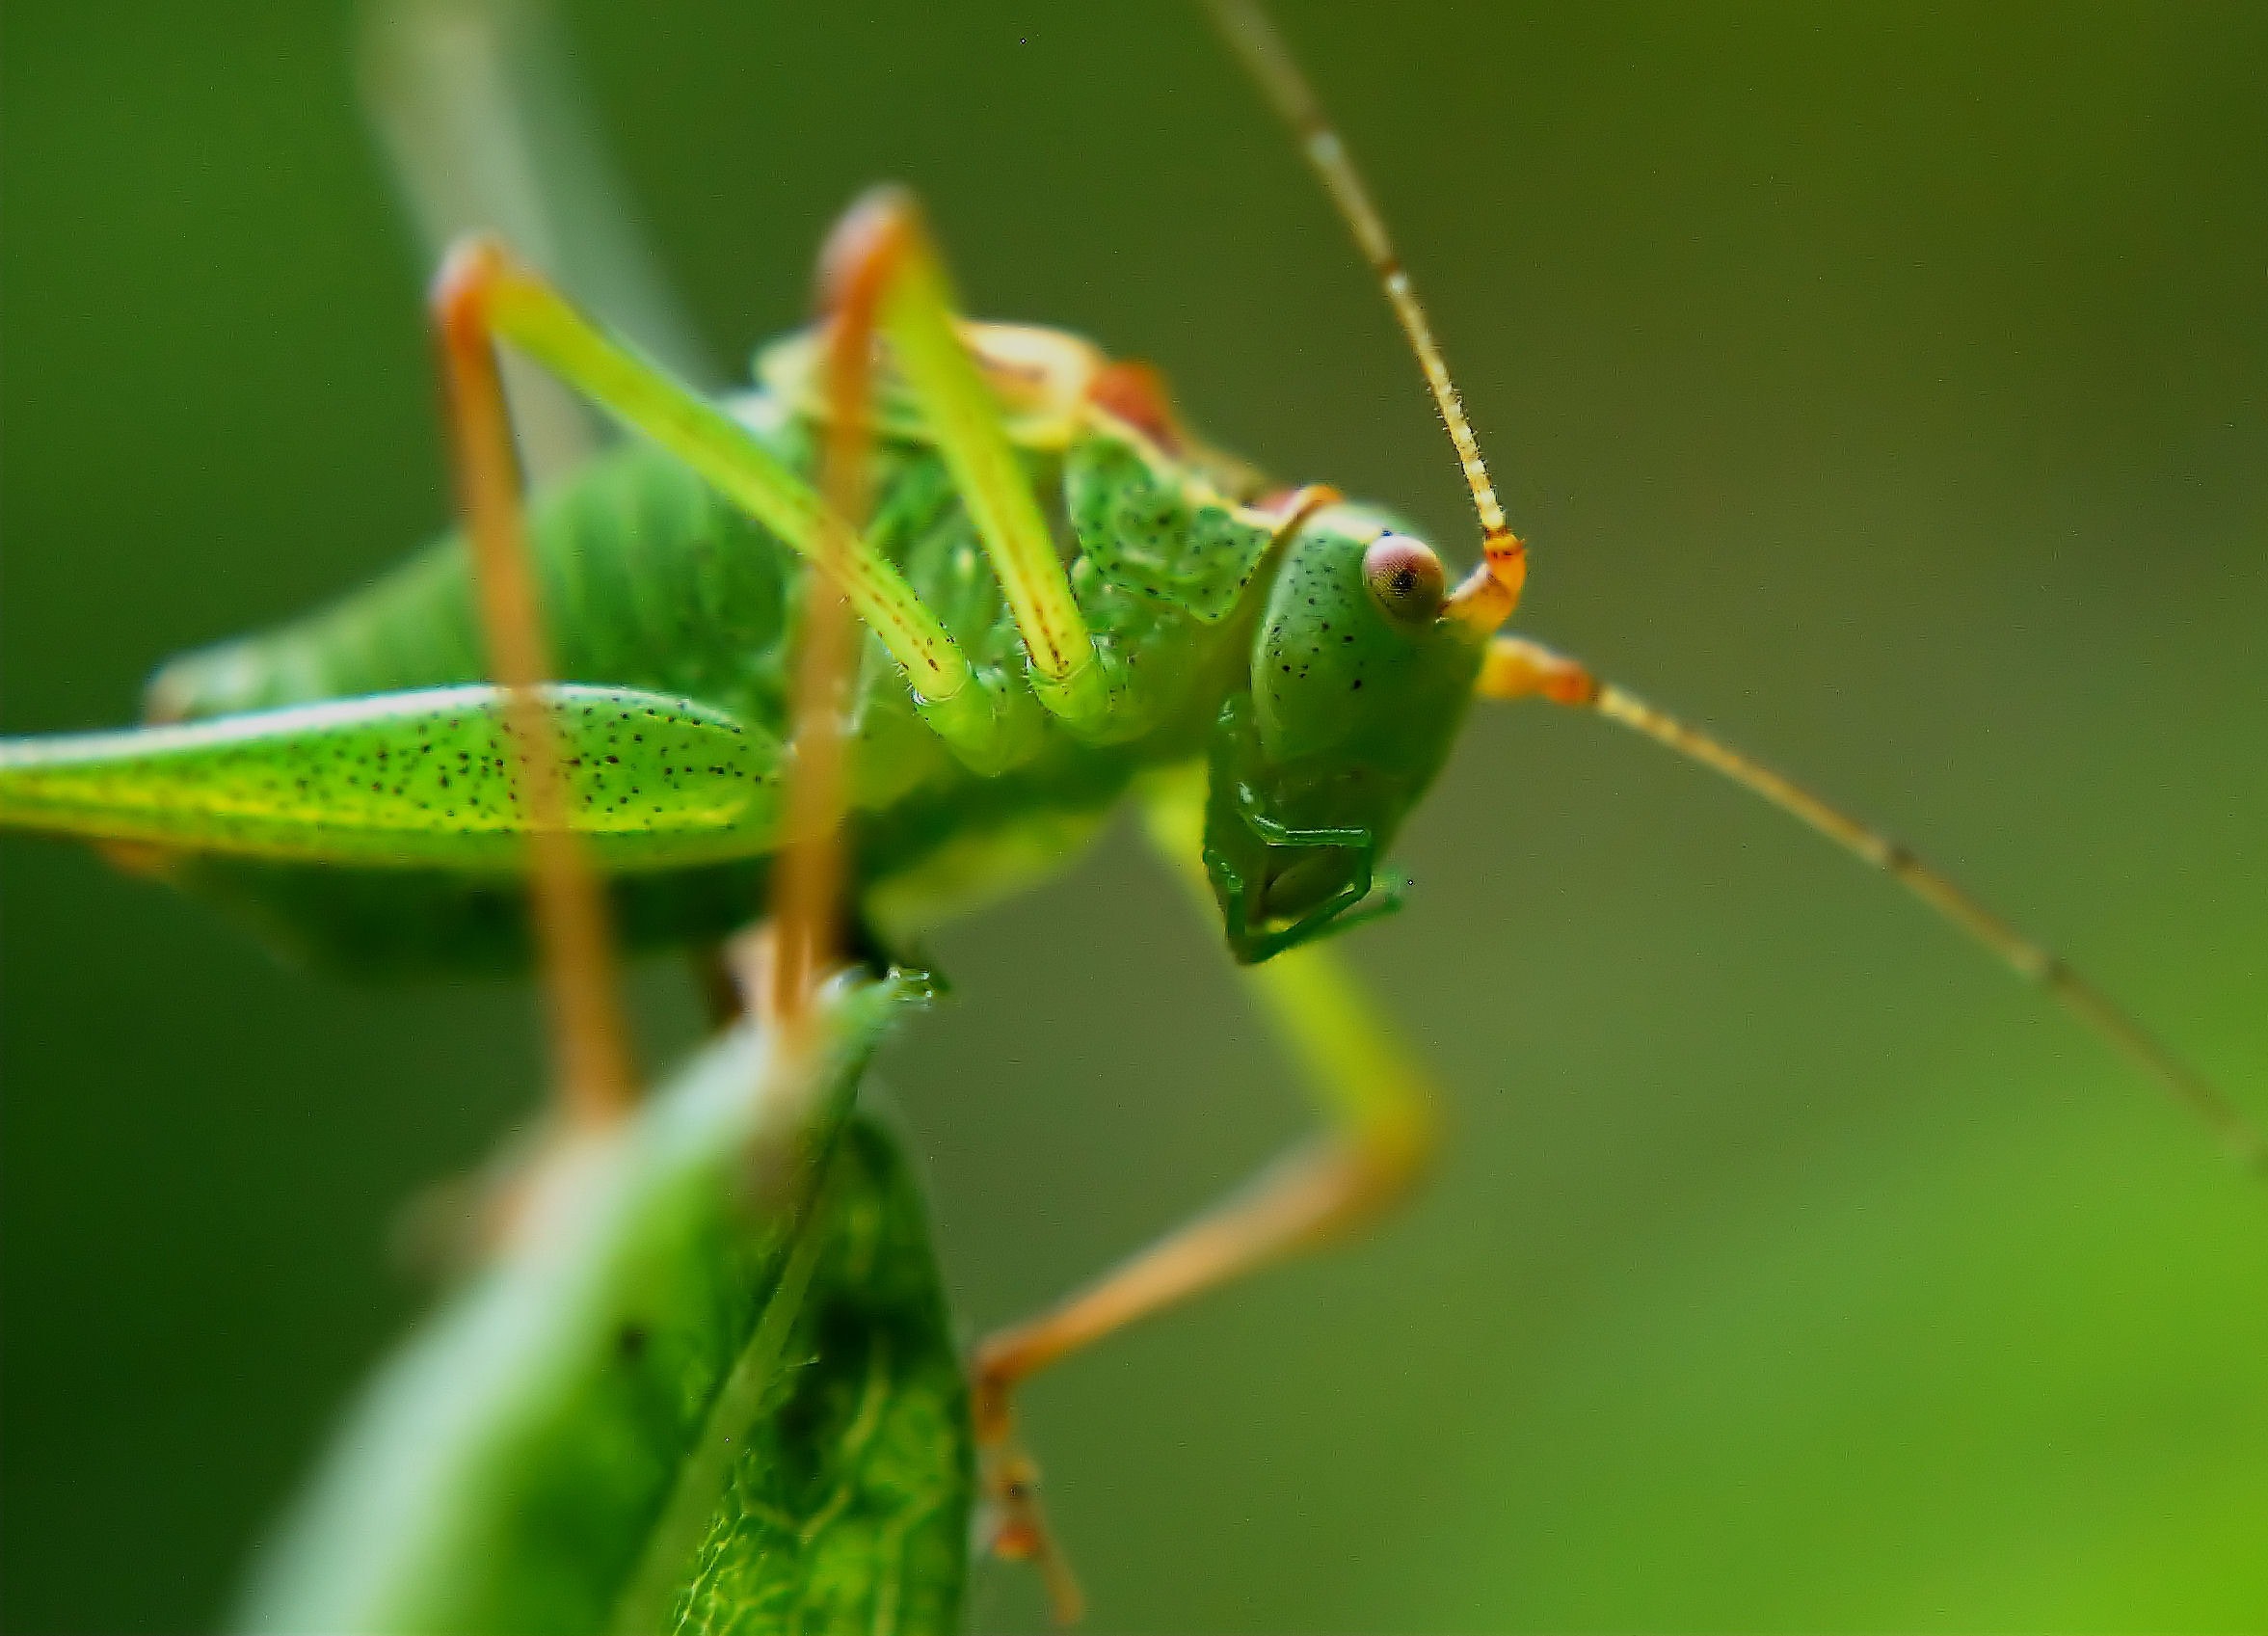 Green grasshopper close up photo